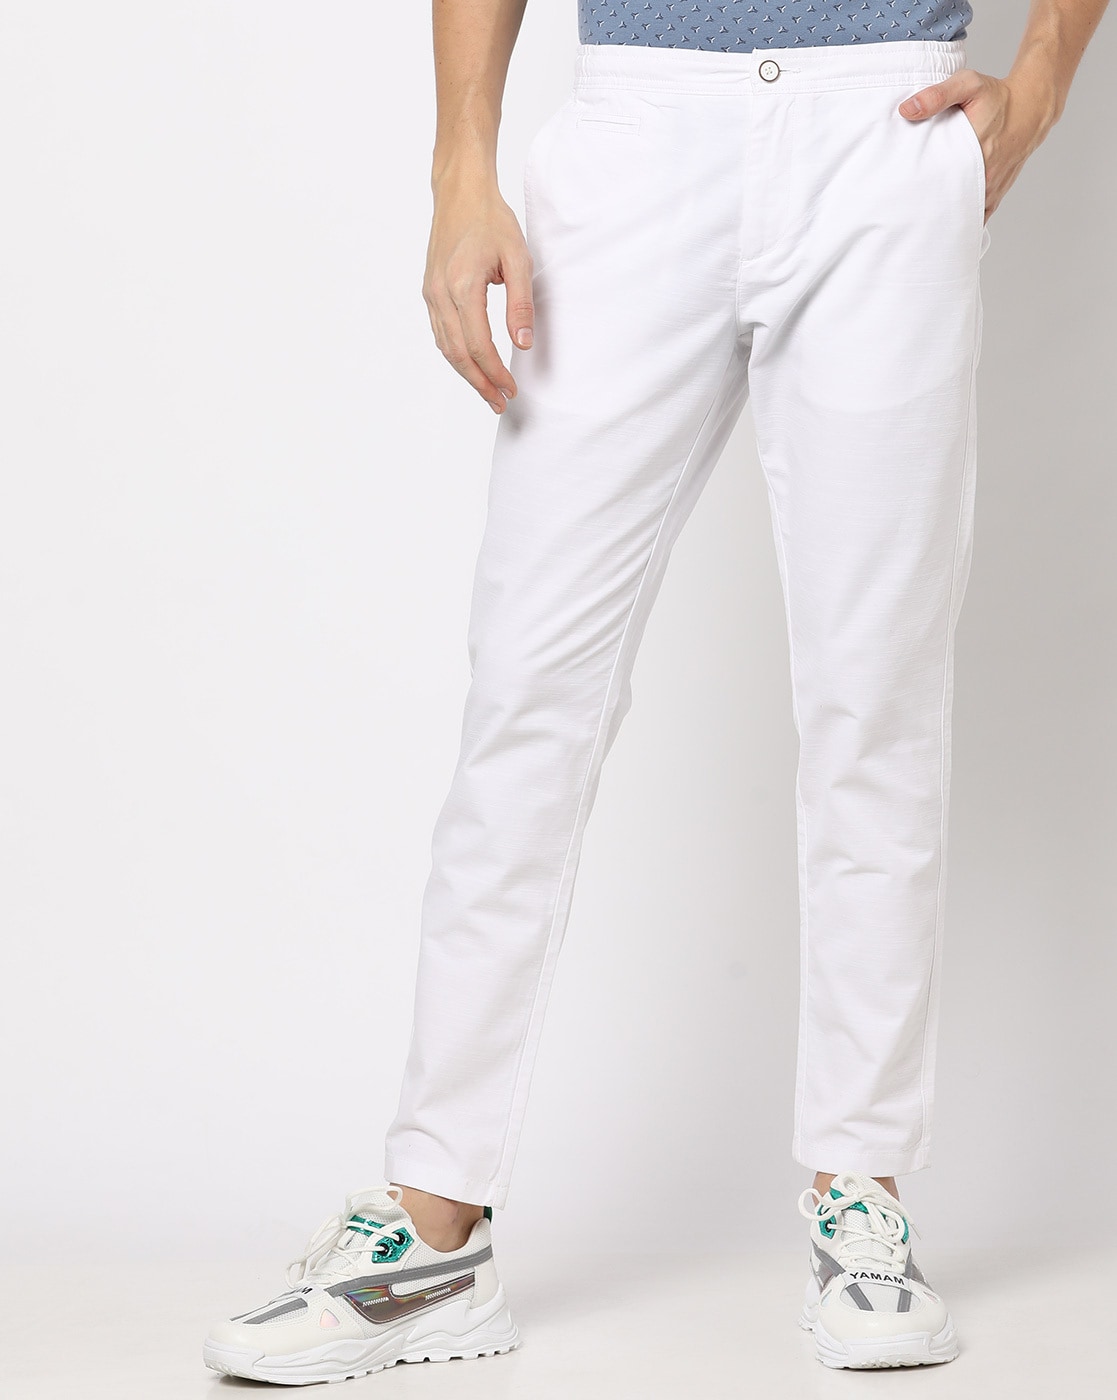 Buy Women White Trousers online in India  Akshalifestyle